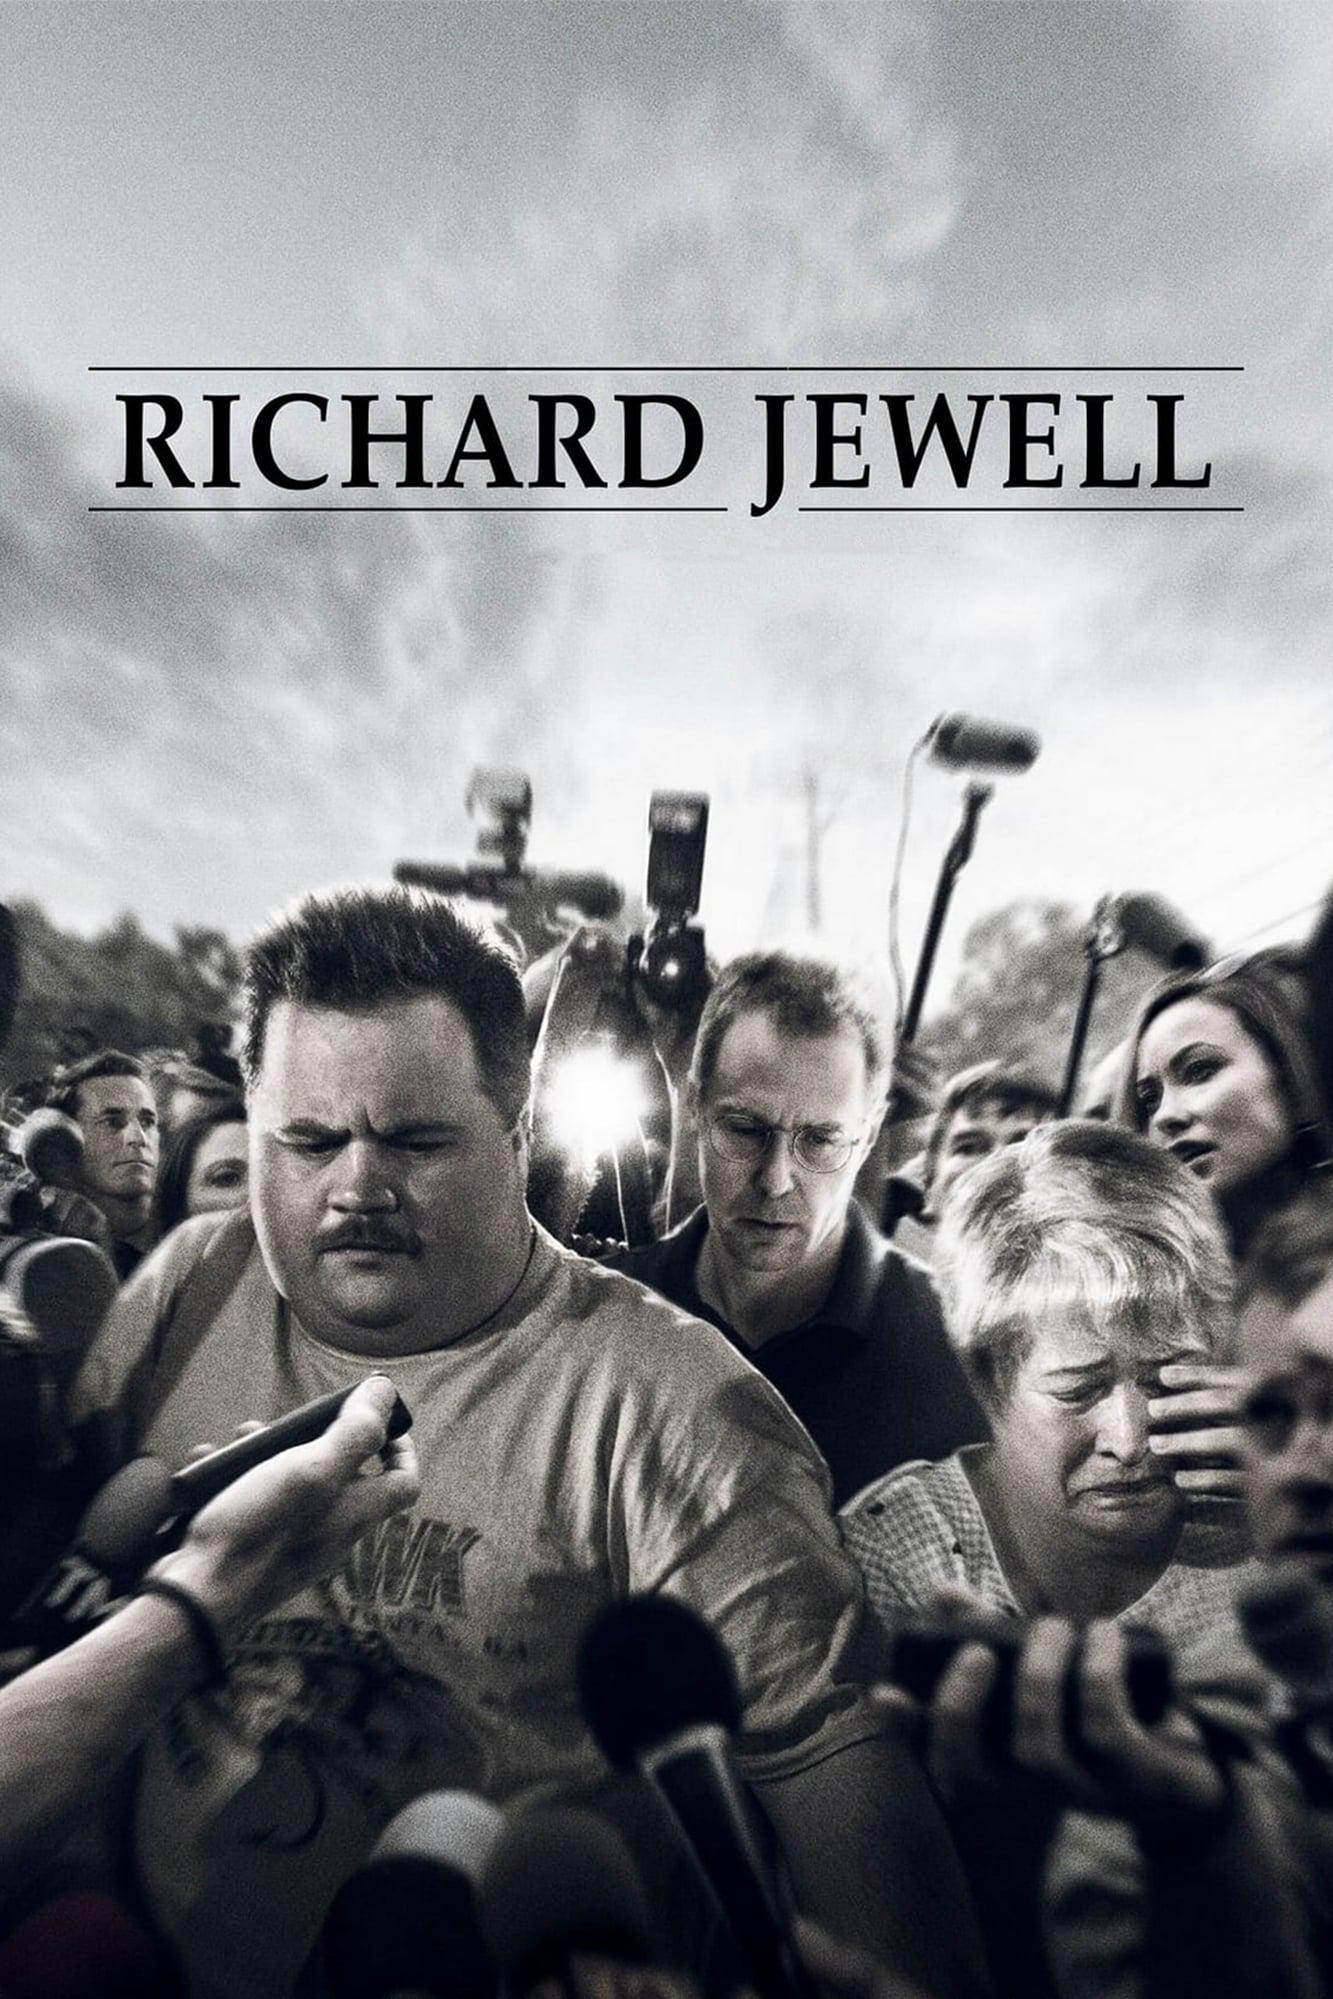 Richard Jewell poster